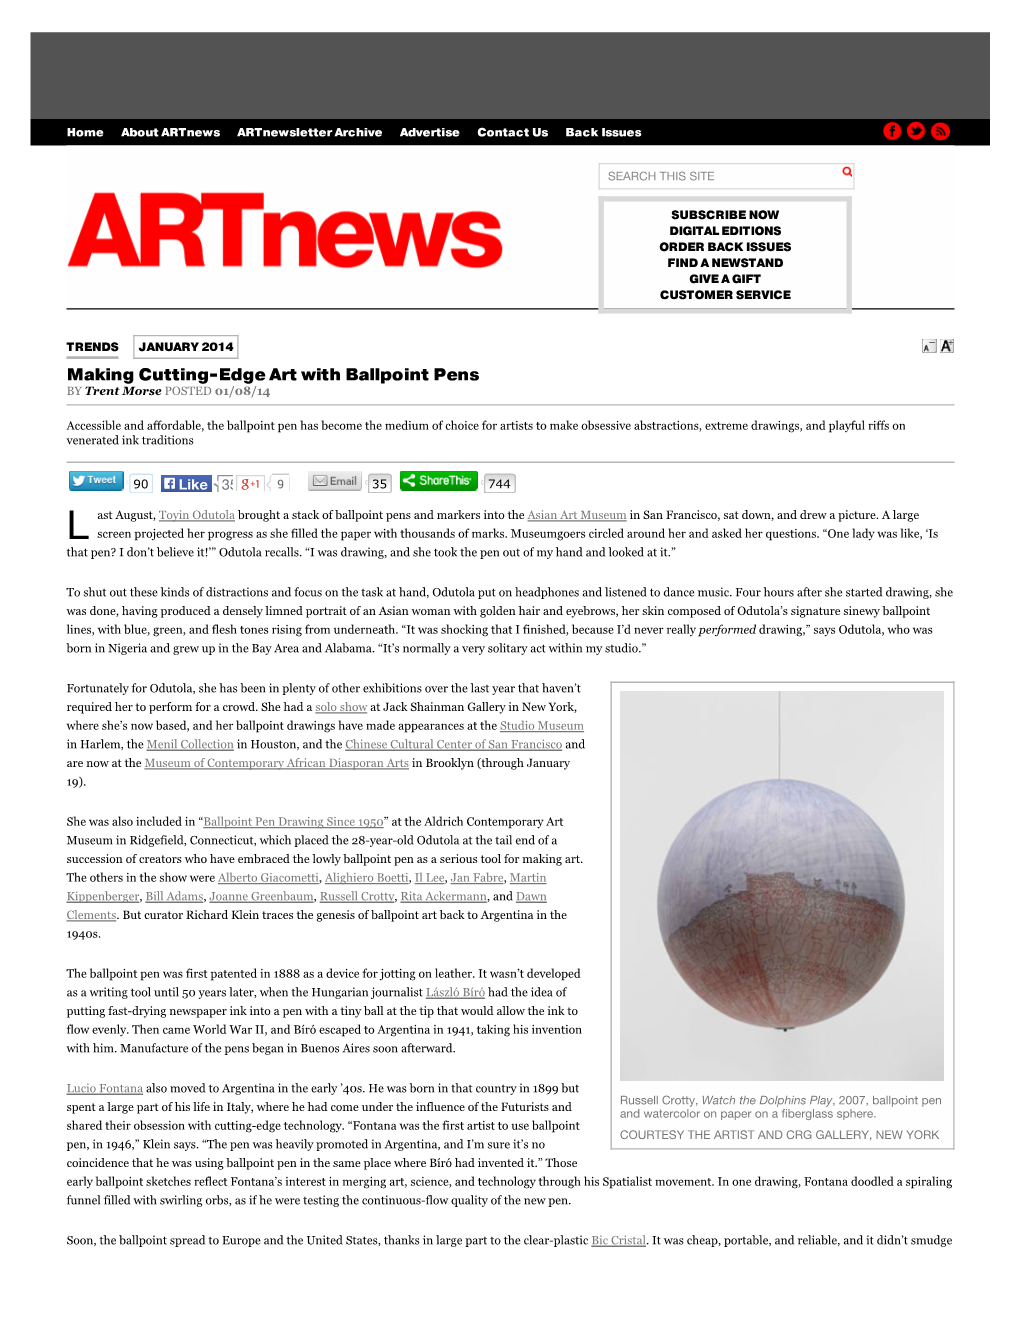 Making Cutting-Edge Art with Ballpoint Pens | Artnews